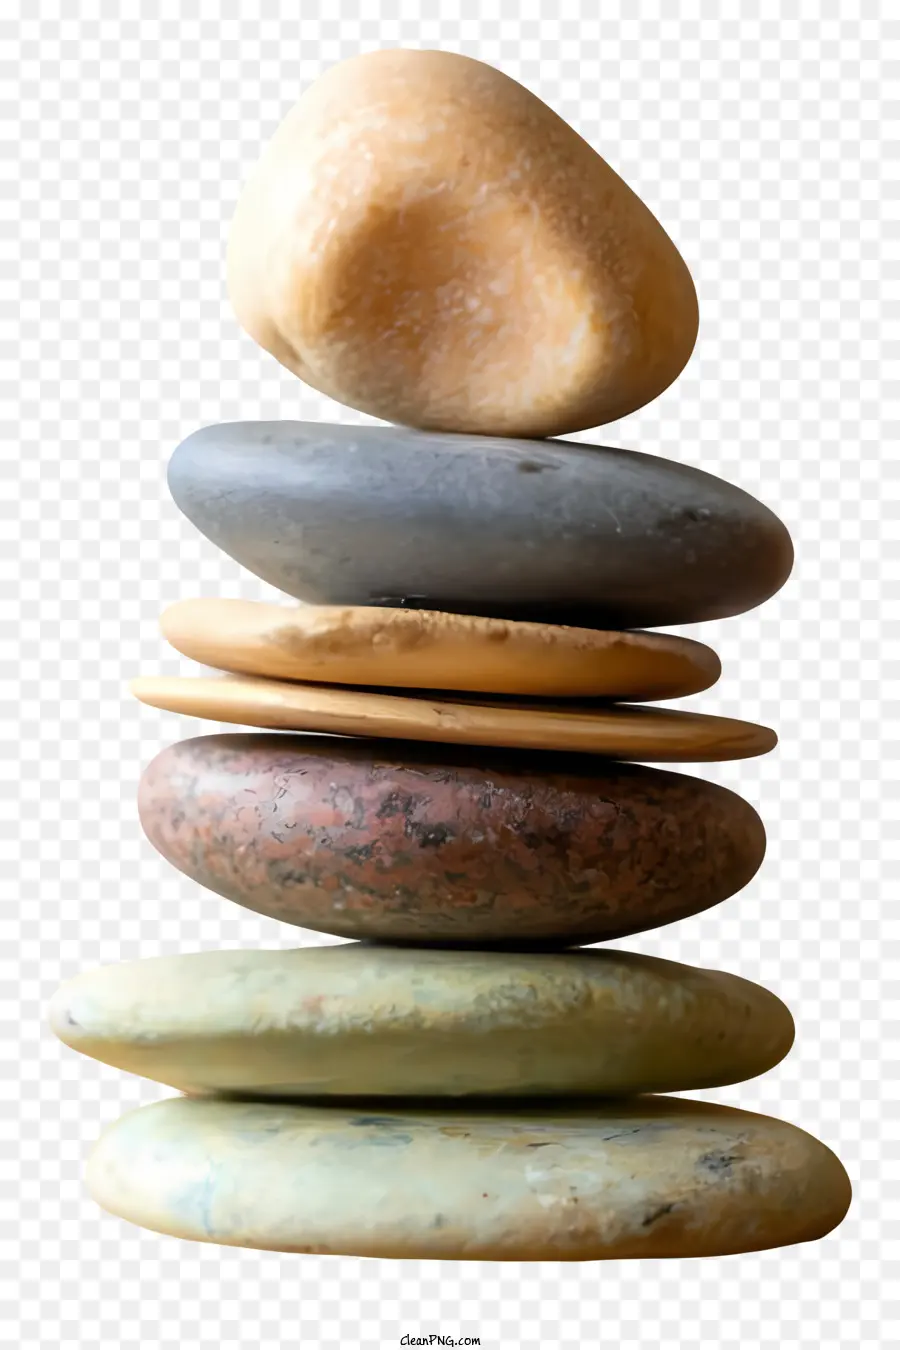 smooth stones round stones colorful stones stone pyramid brown stones